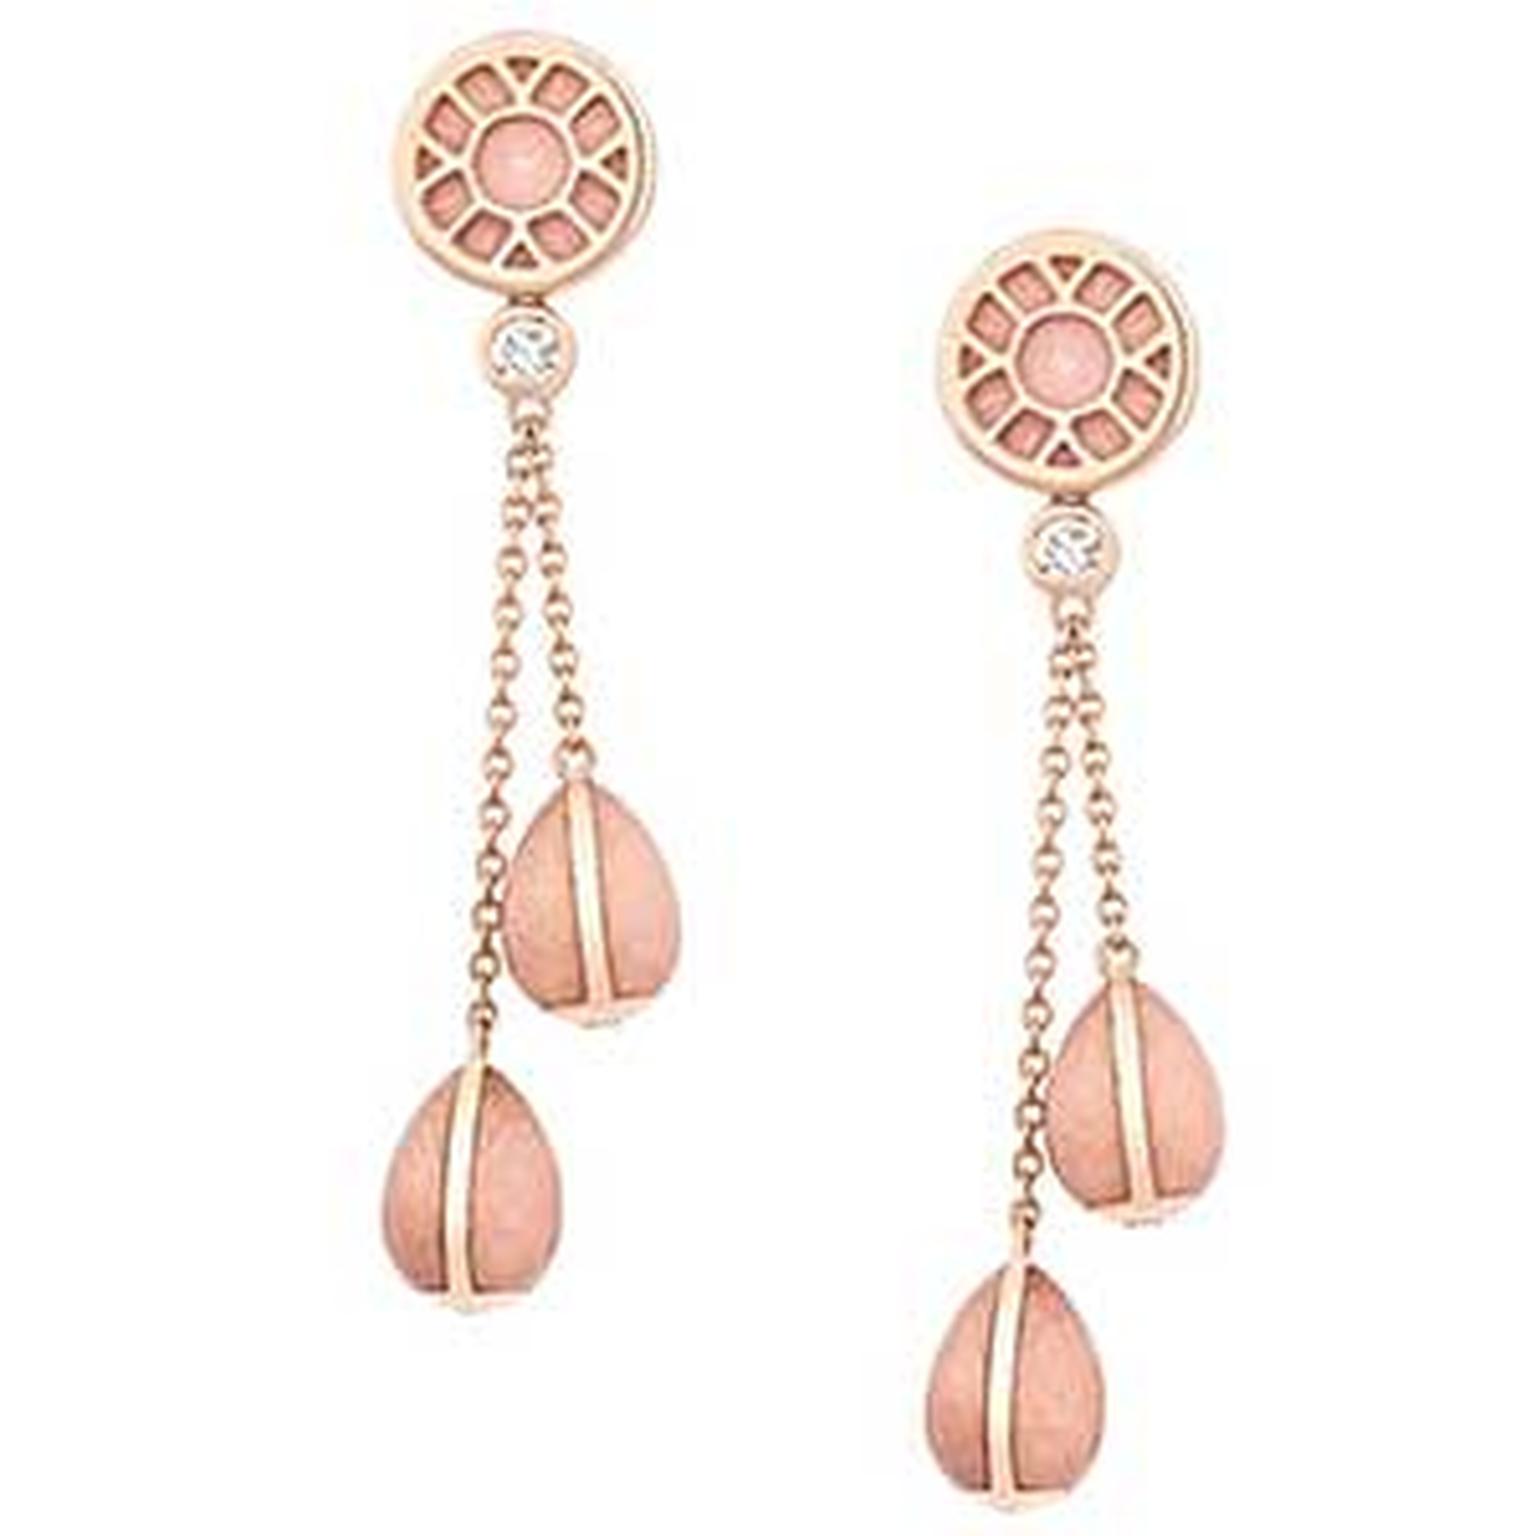 Faberge -egg -earrings